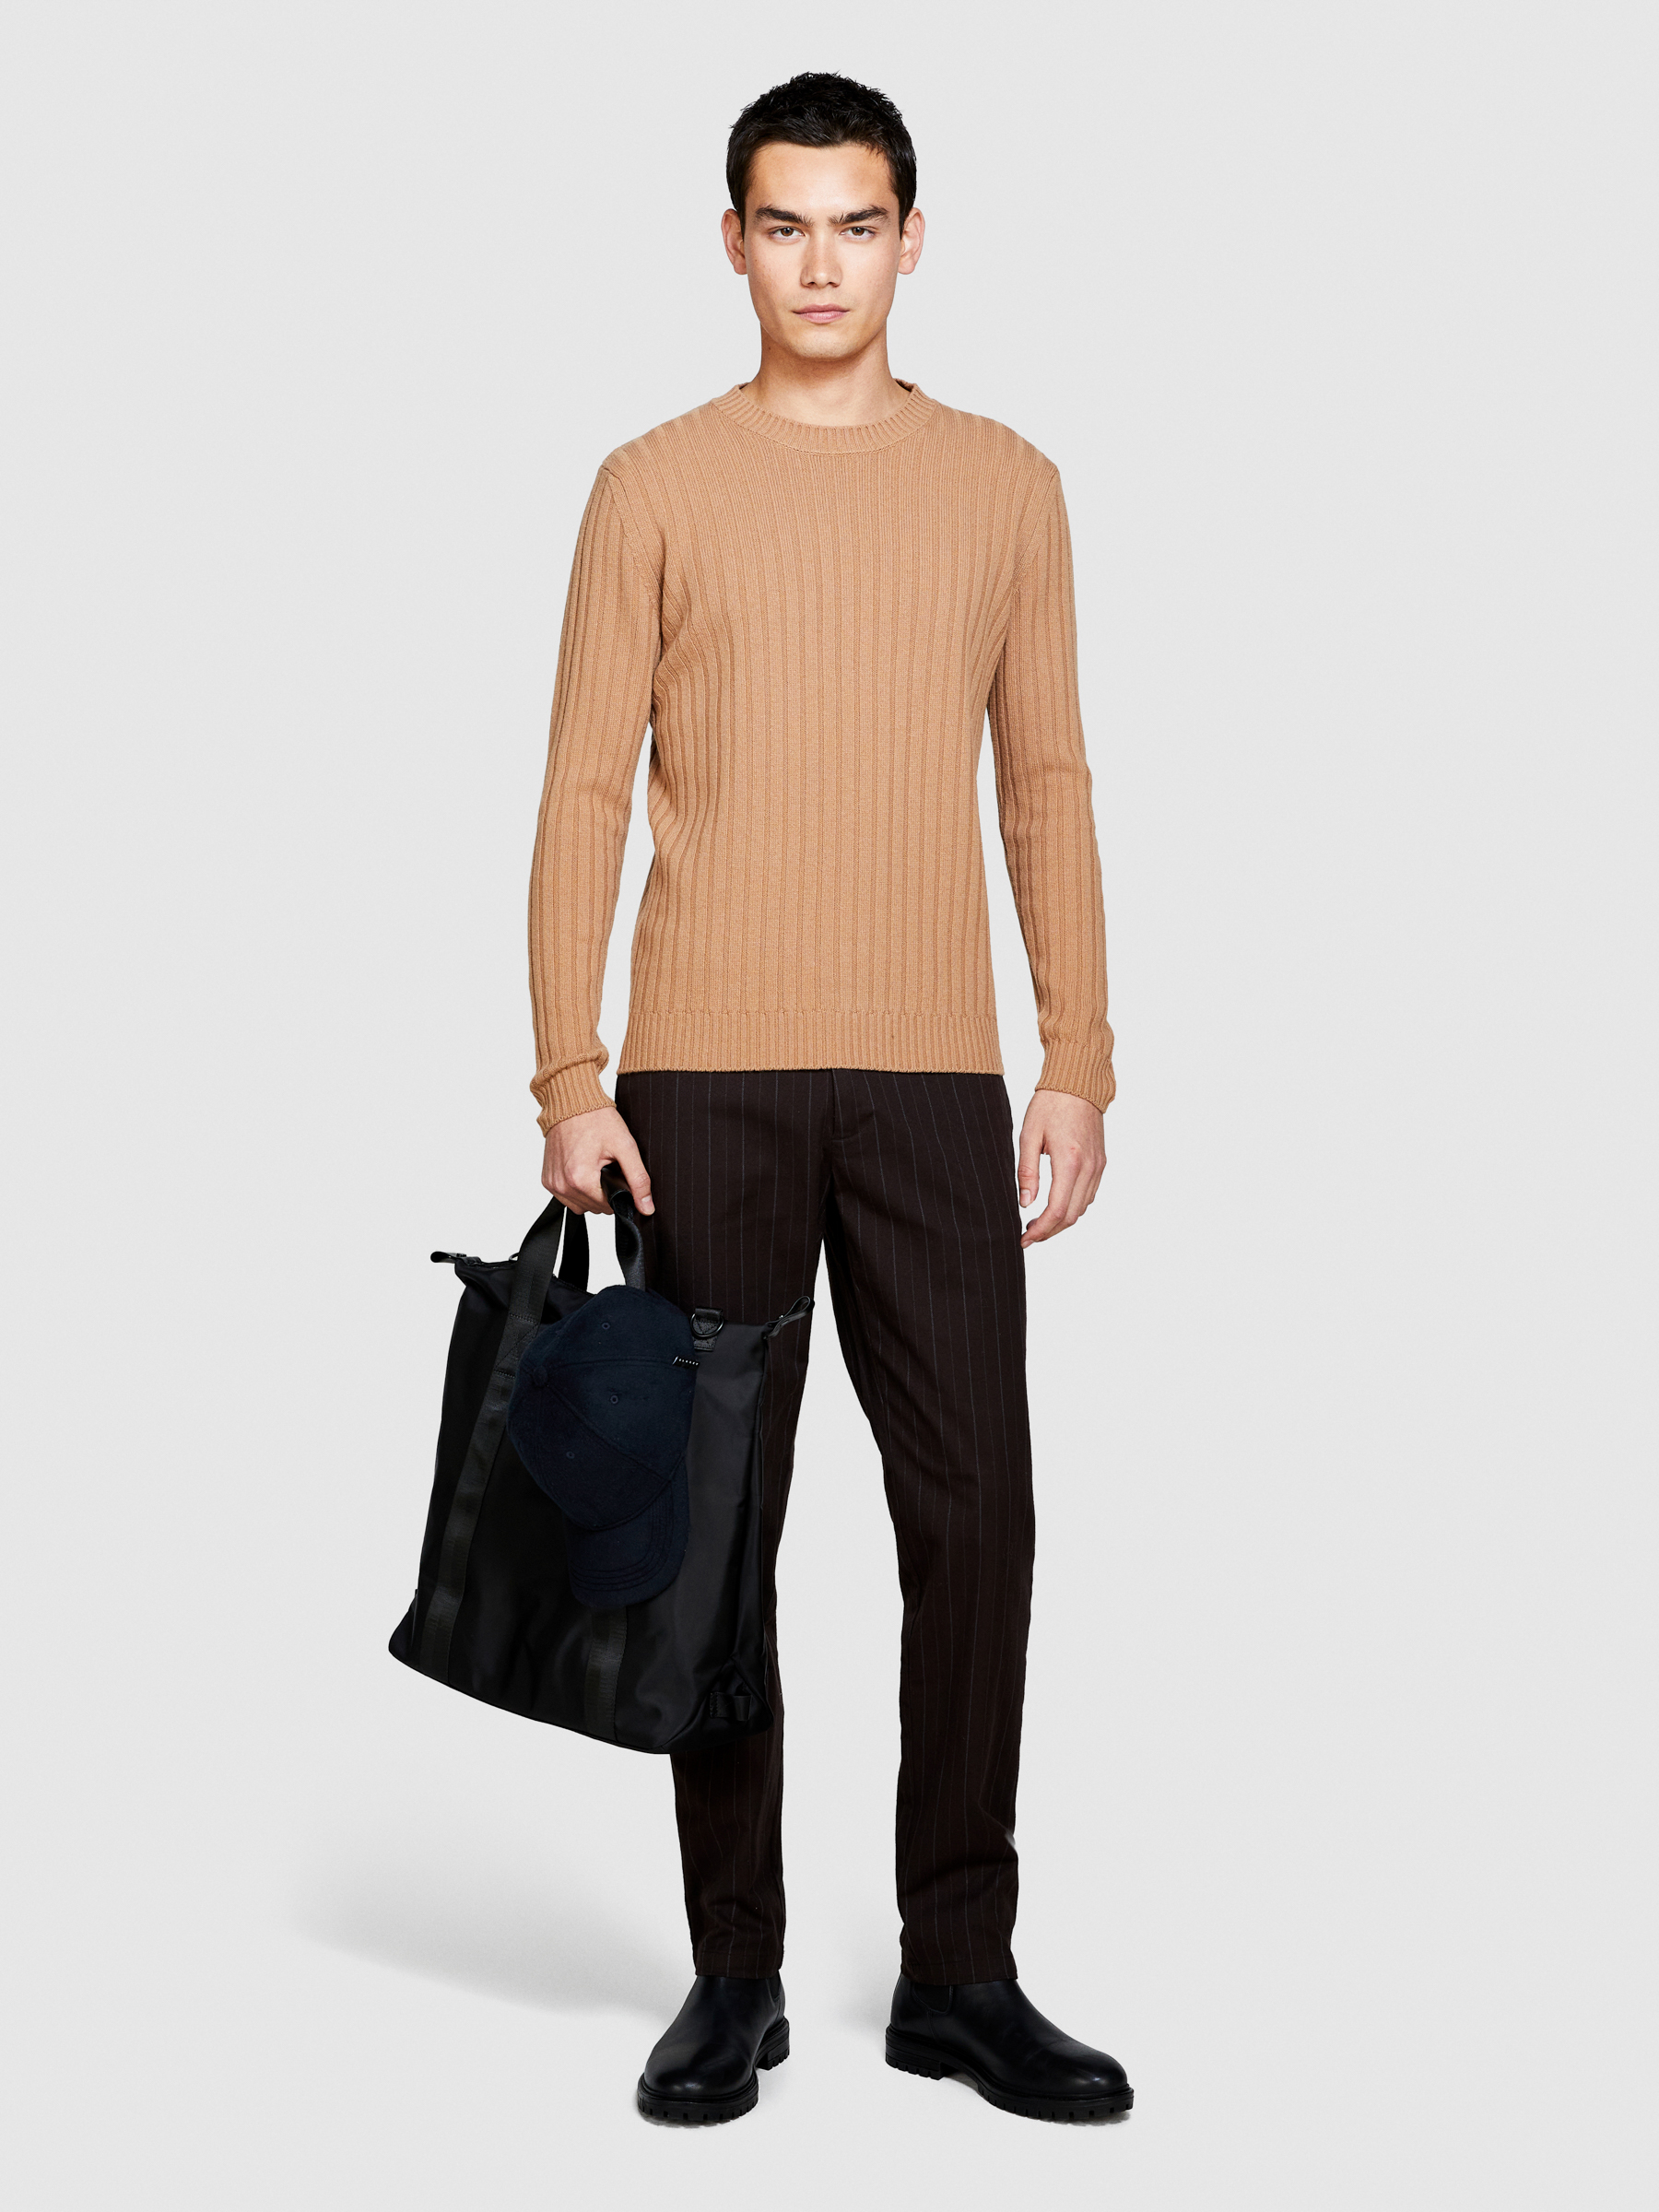 Sisley - 100% Virgin Wool Sweater, Man, Camel, Size: S